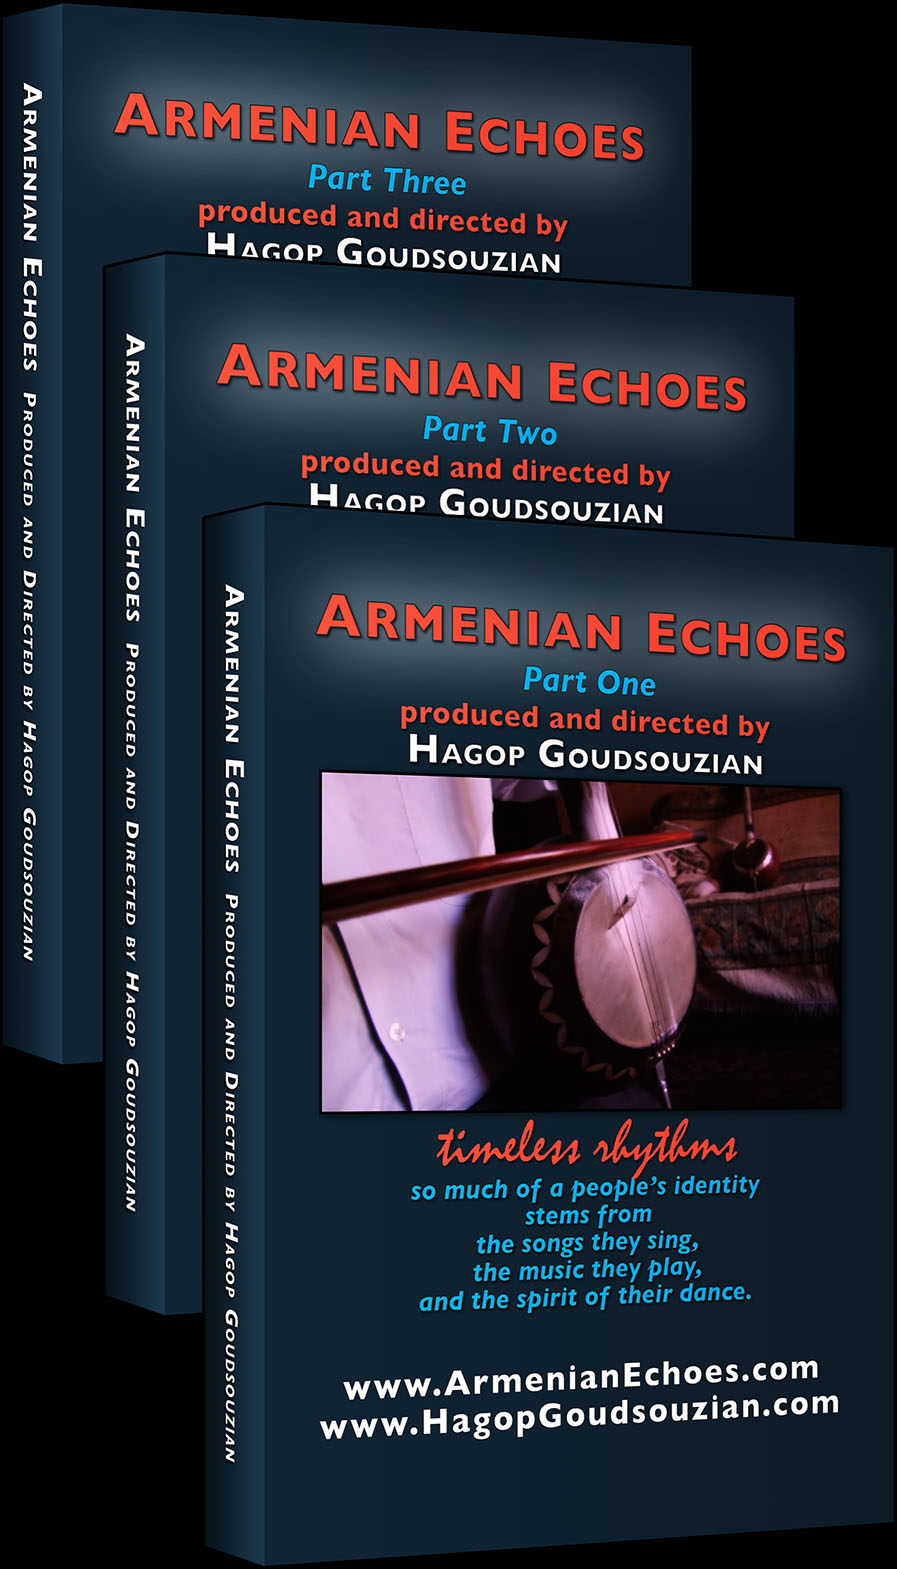 Armenian Echoes DVD